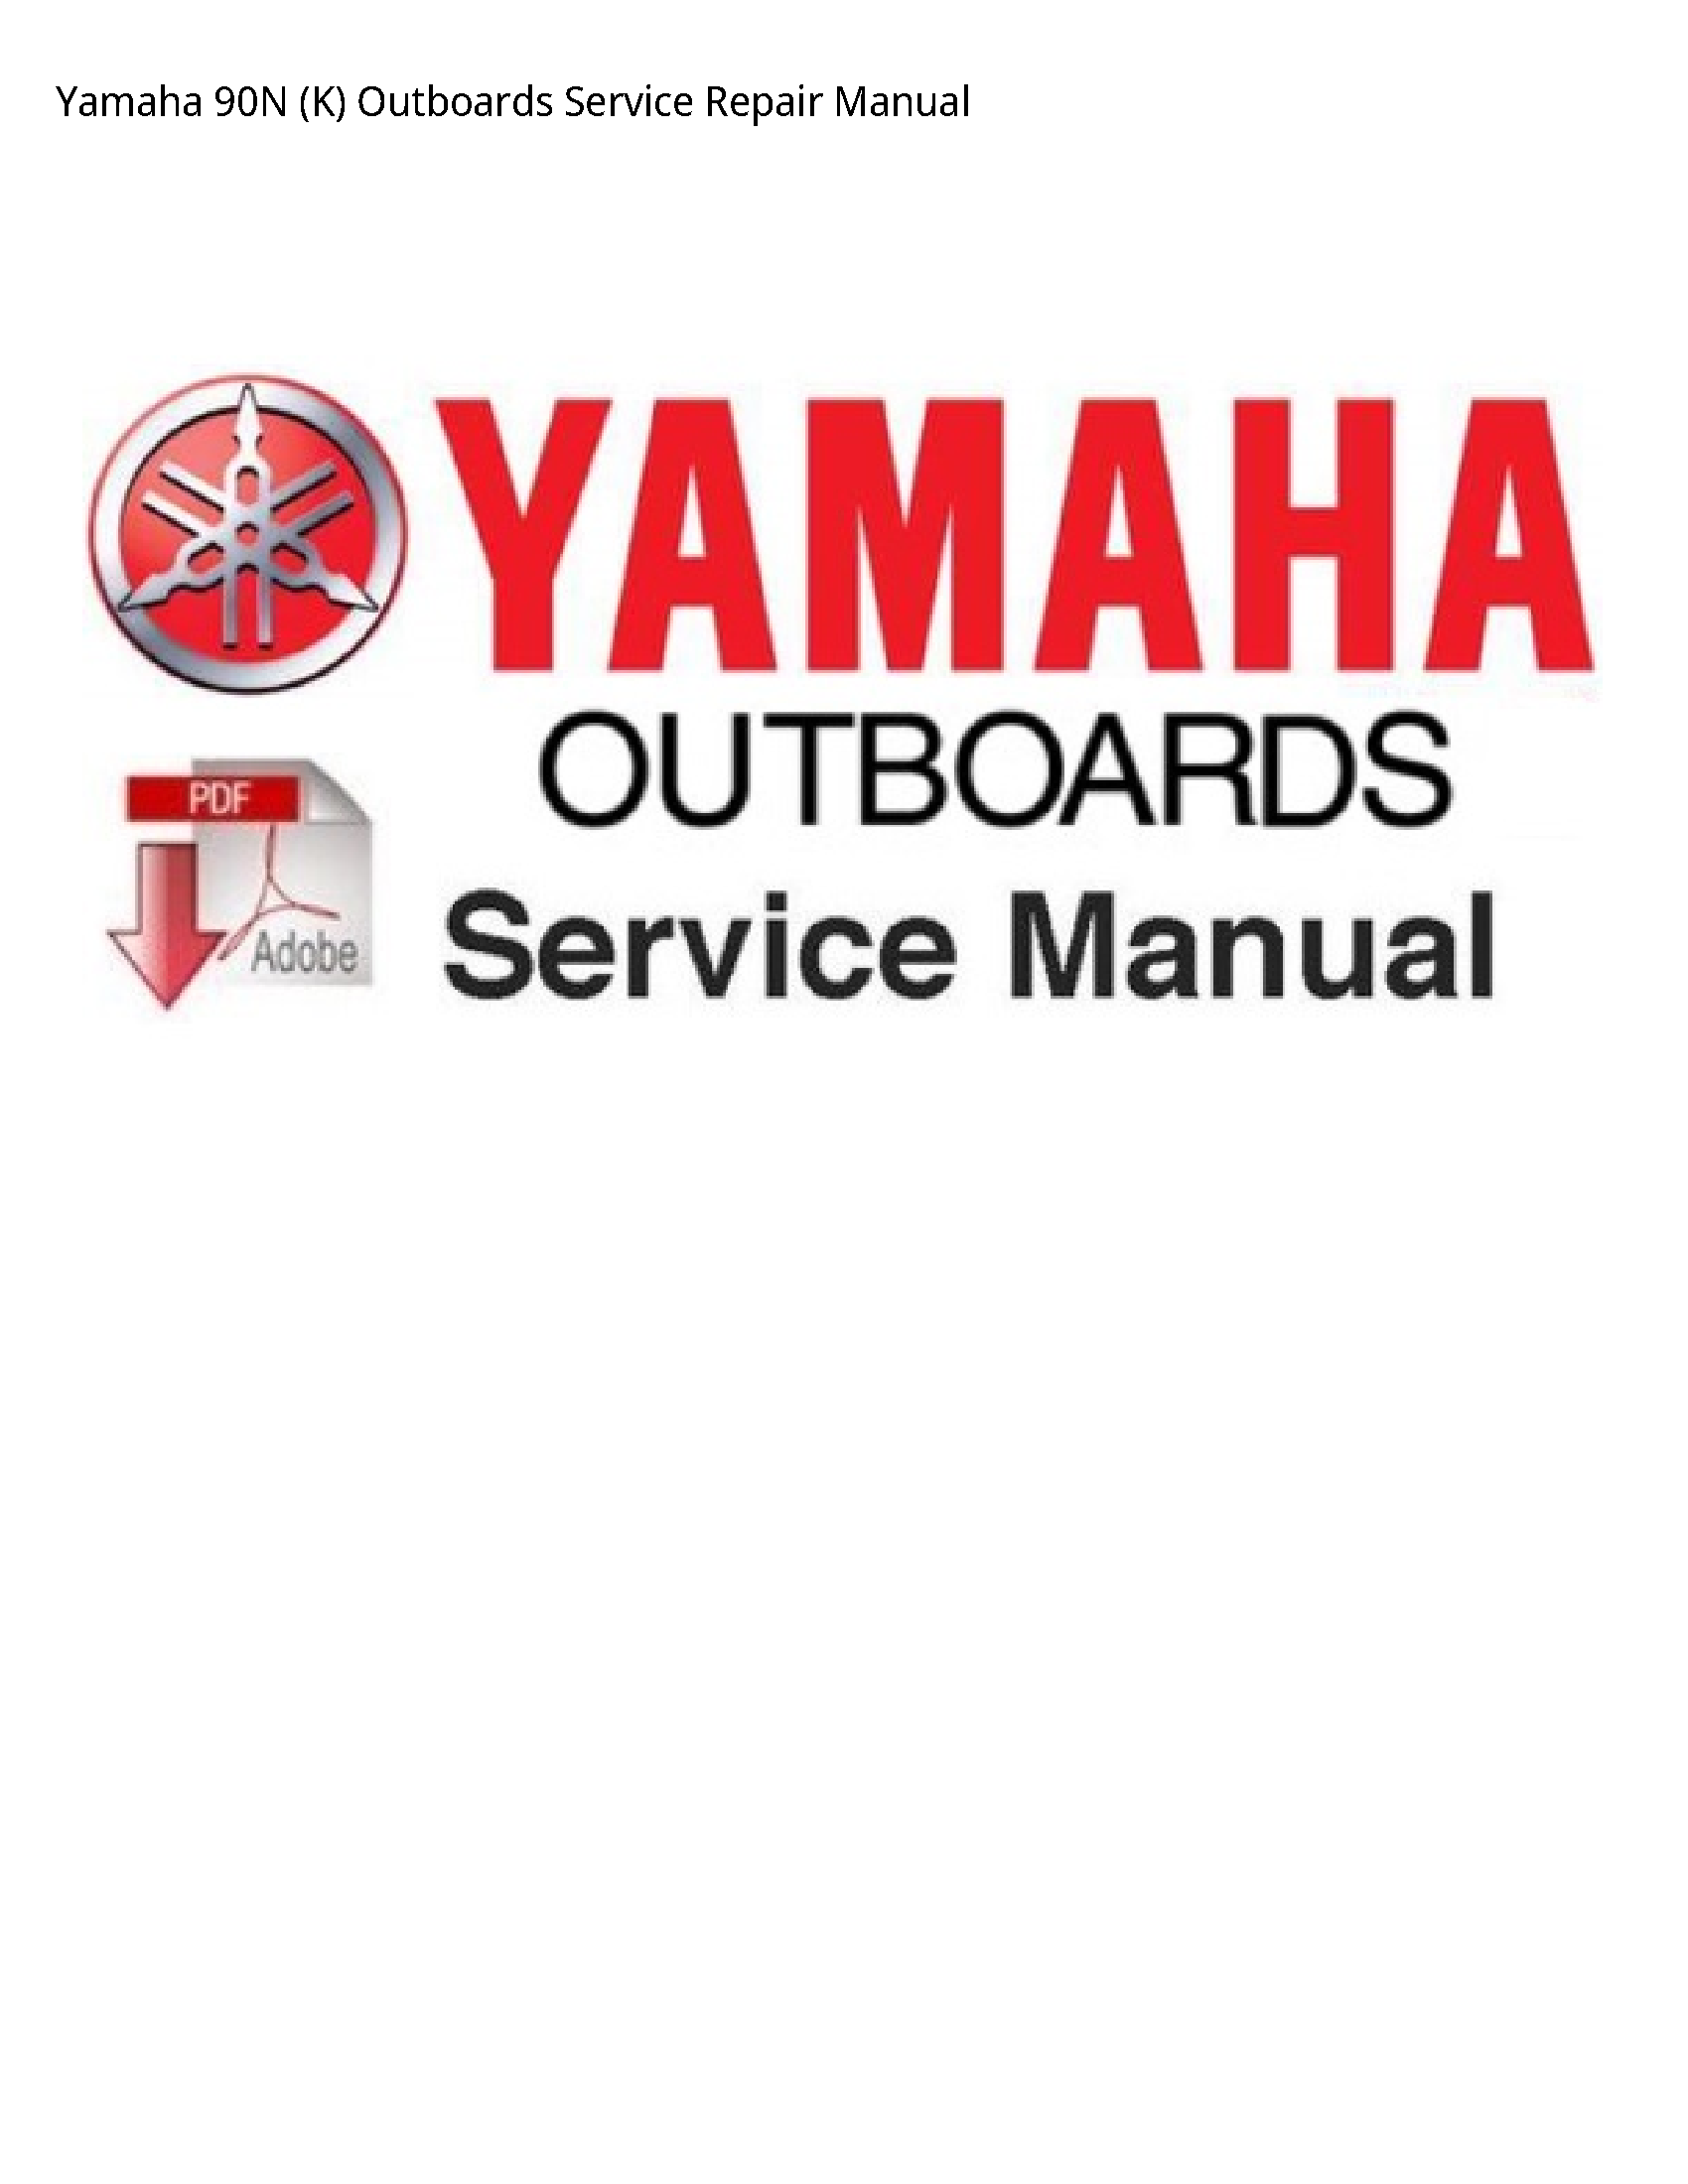 Yamaha 90N (K) Outboards manual